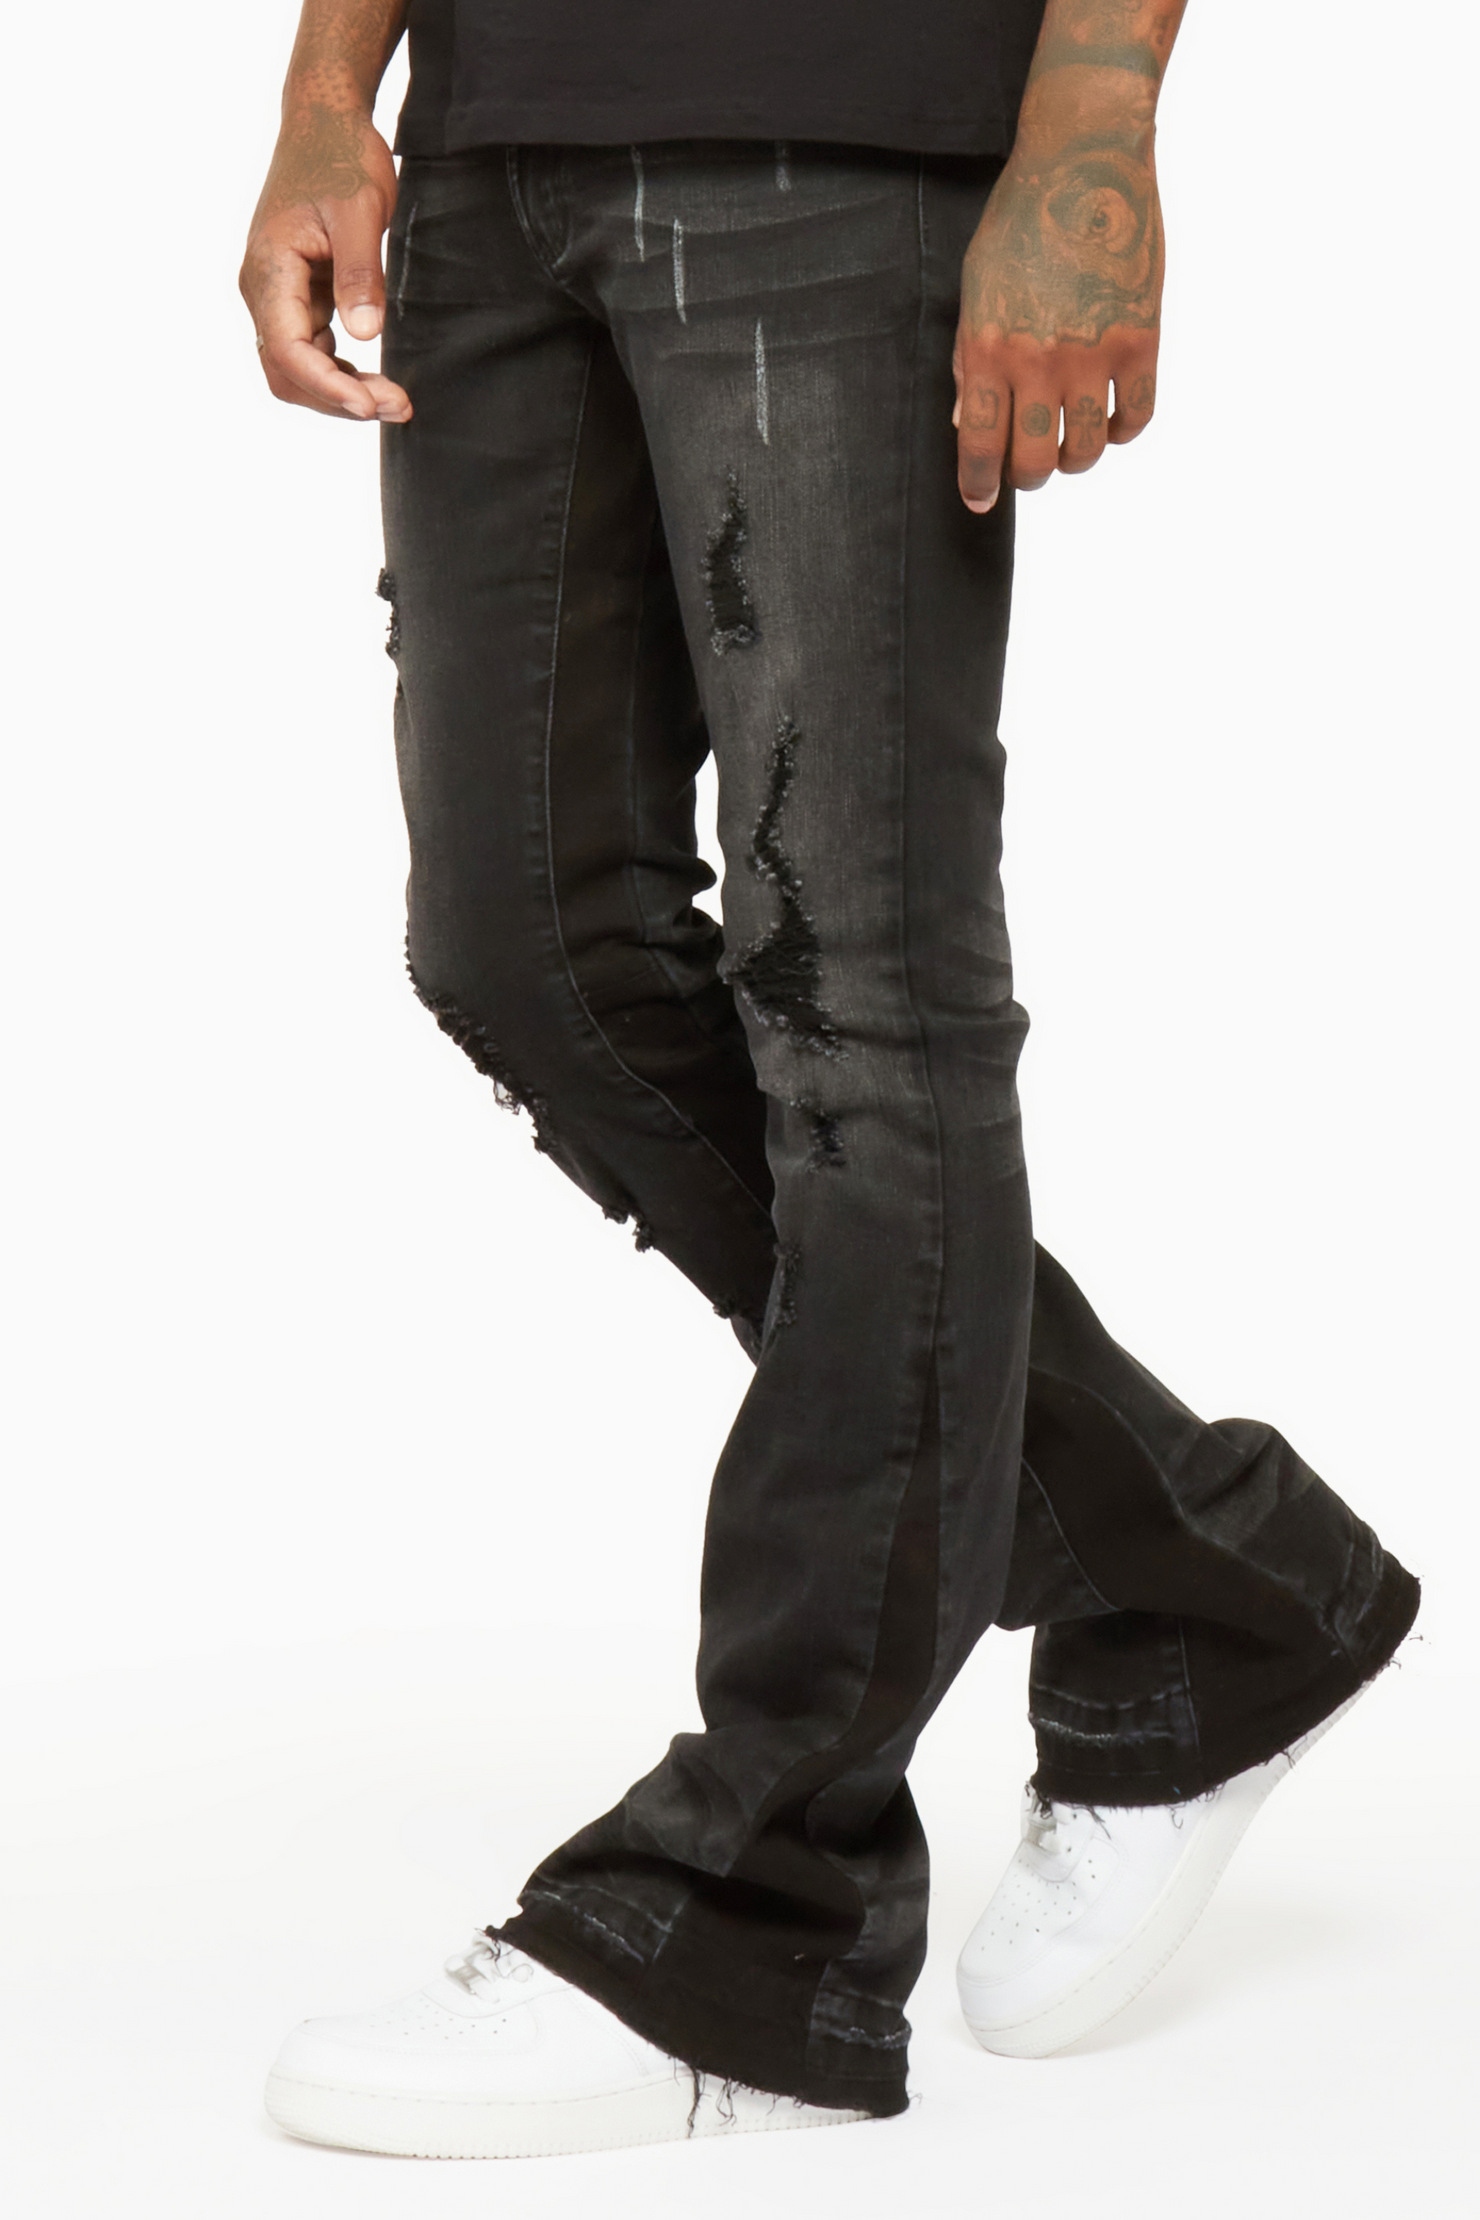 Tibbs Black Stacked Flare Jean